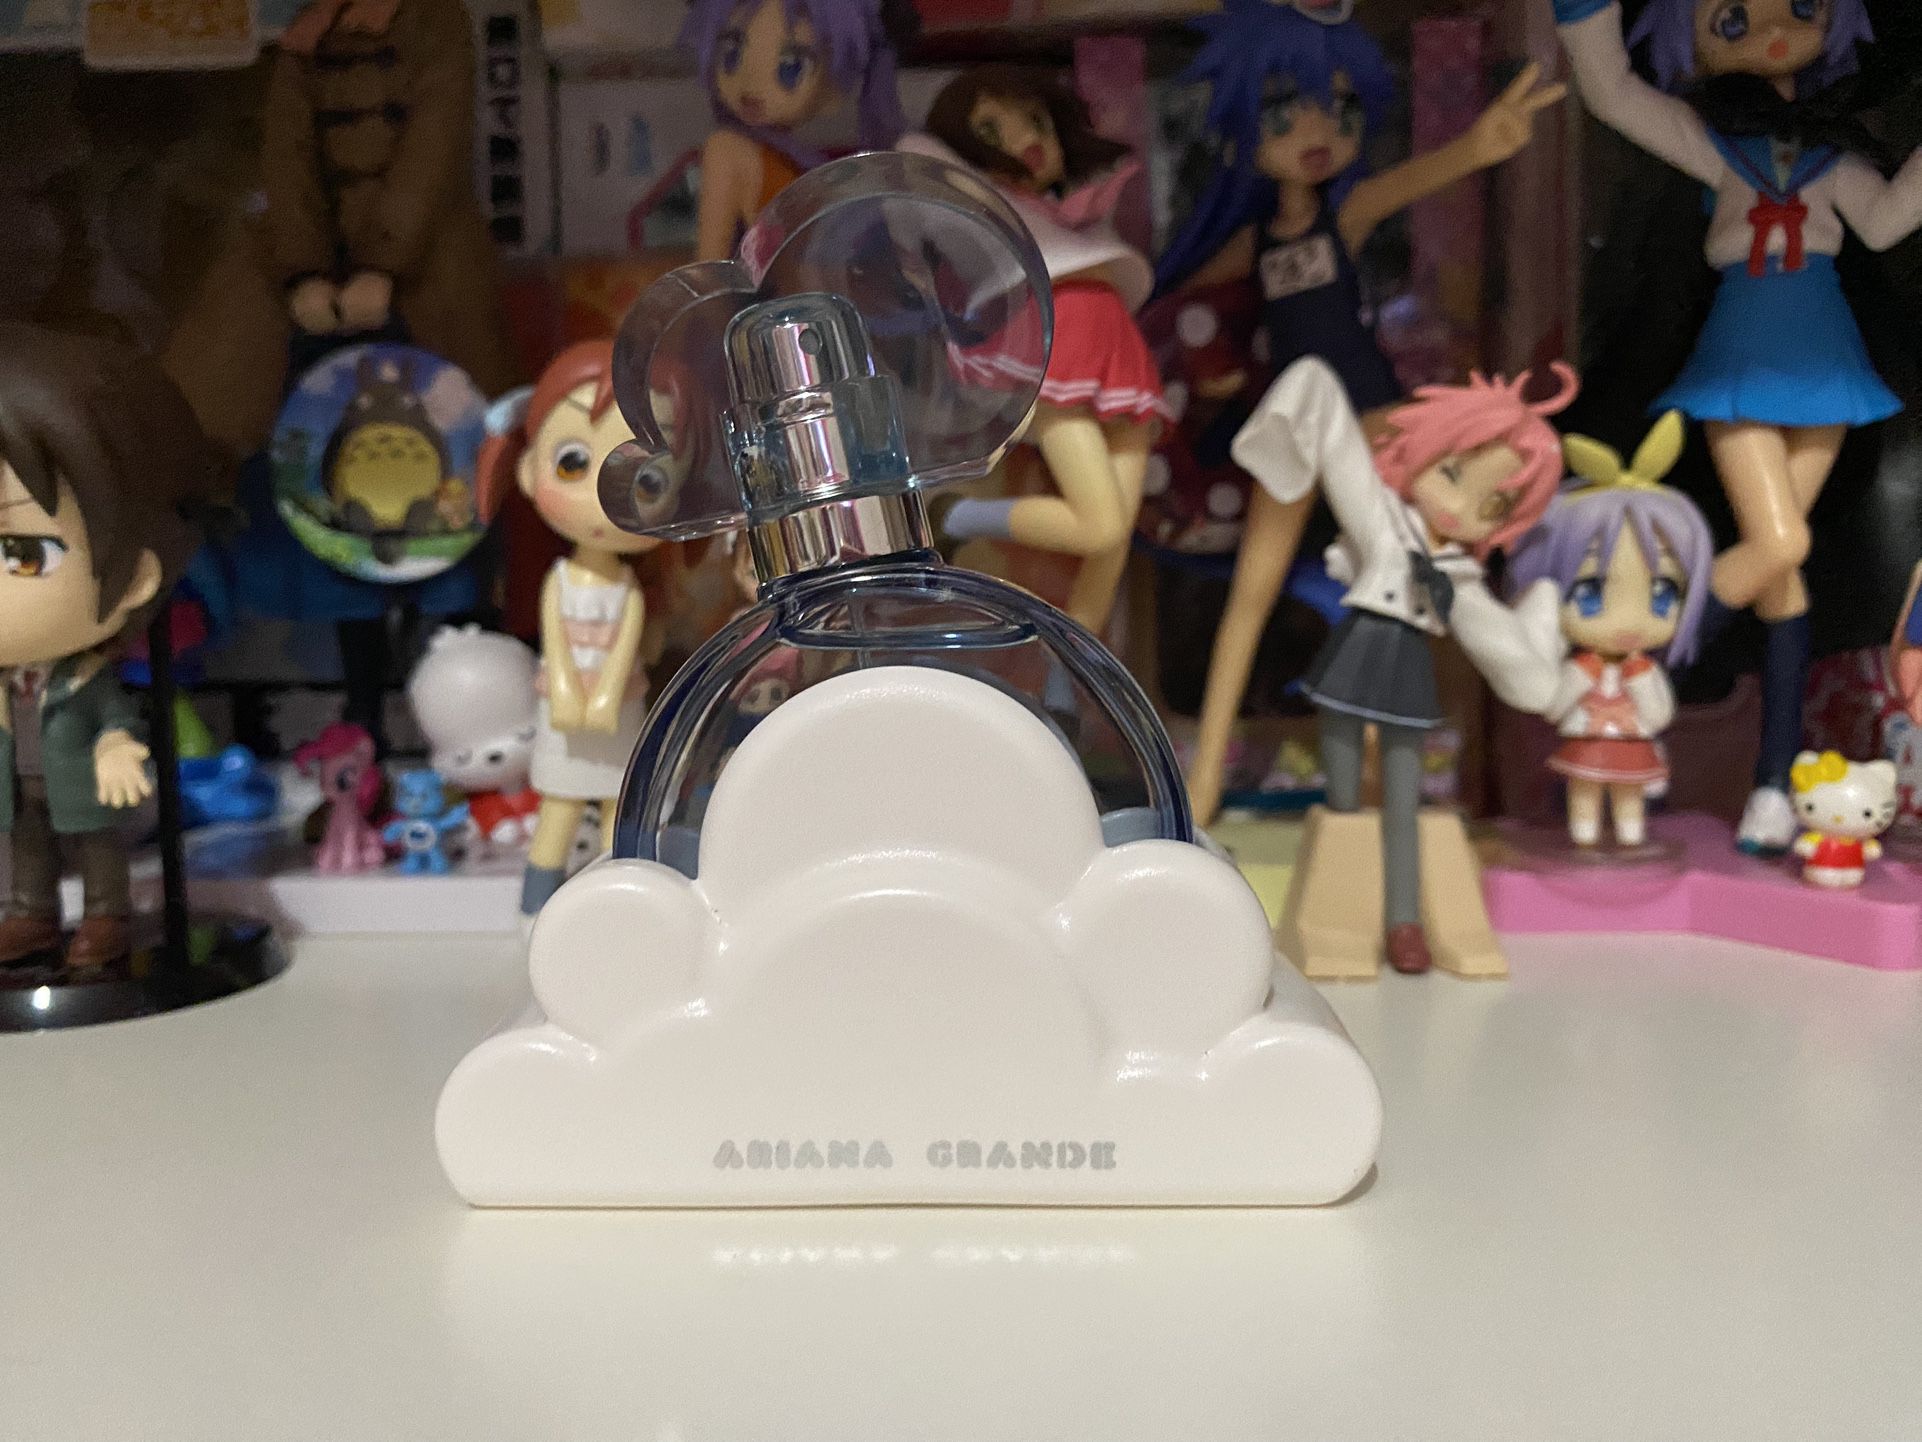 Ariana Grande Cloud Perfume 